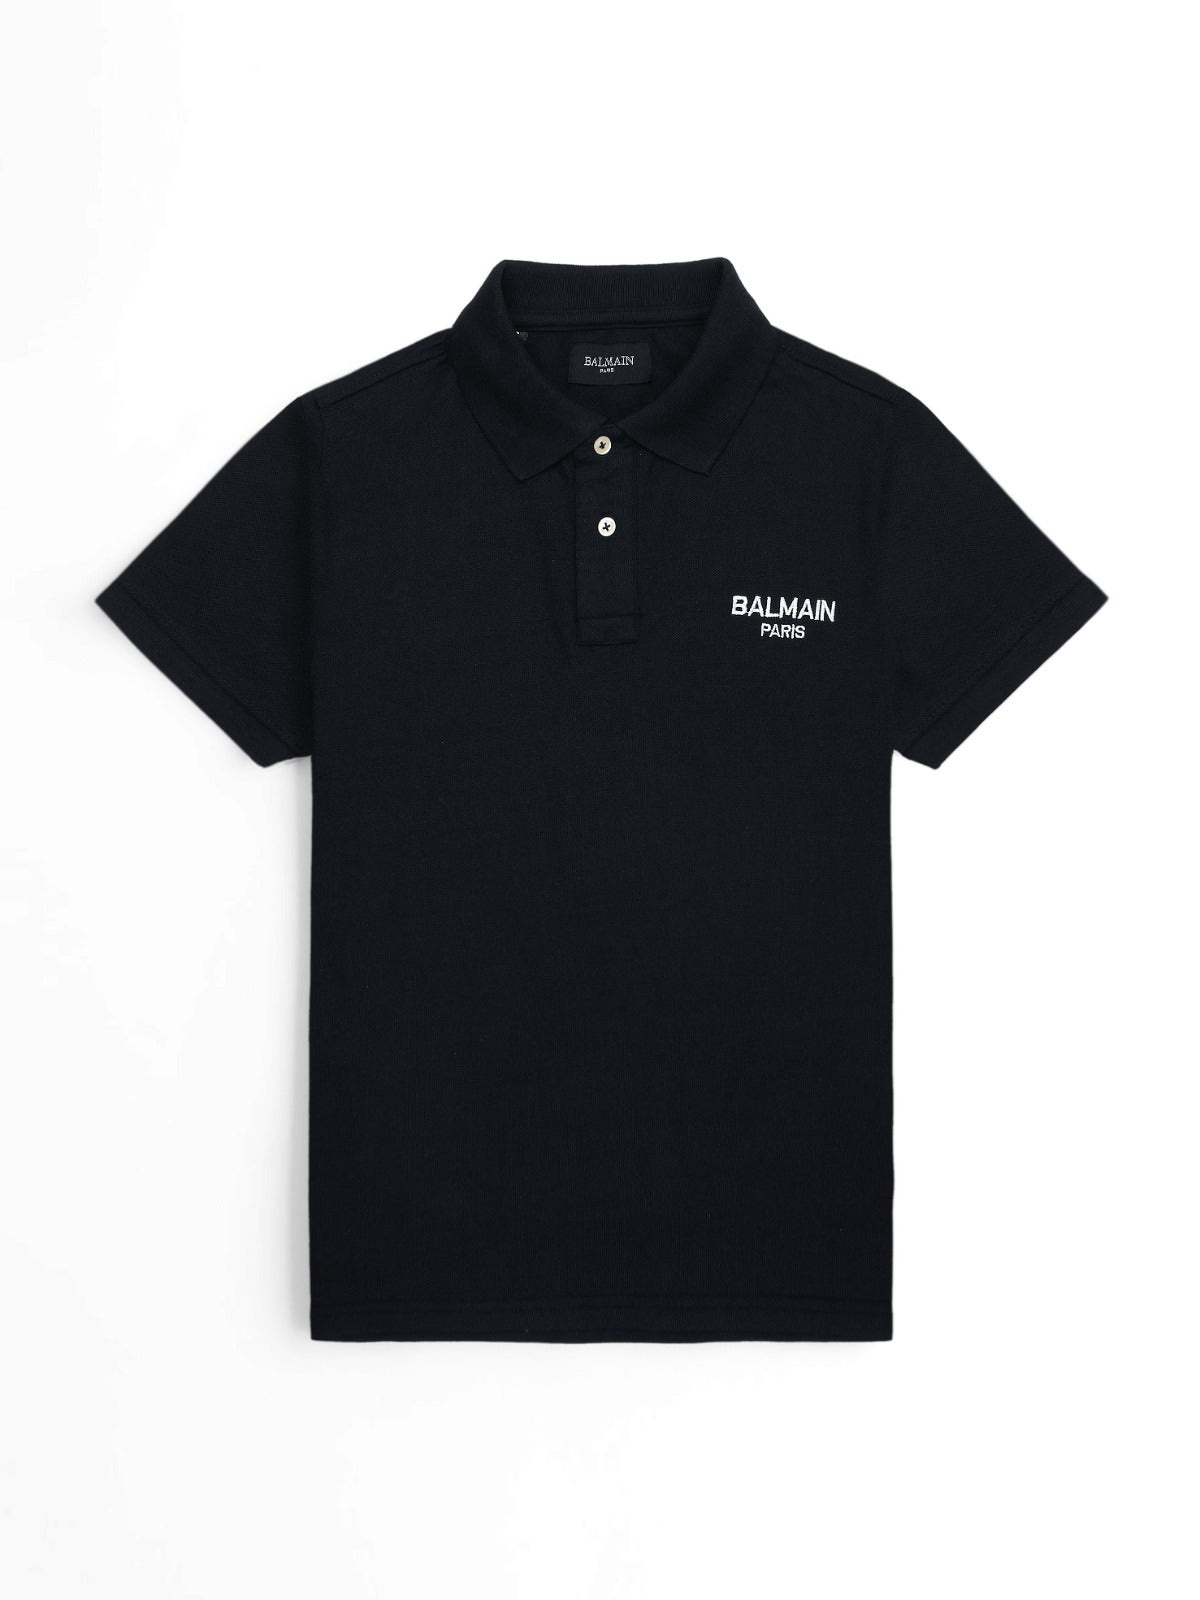 BLMN soft cotton black polo shirt(00320)